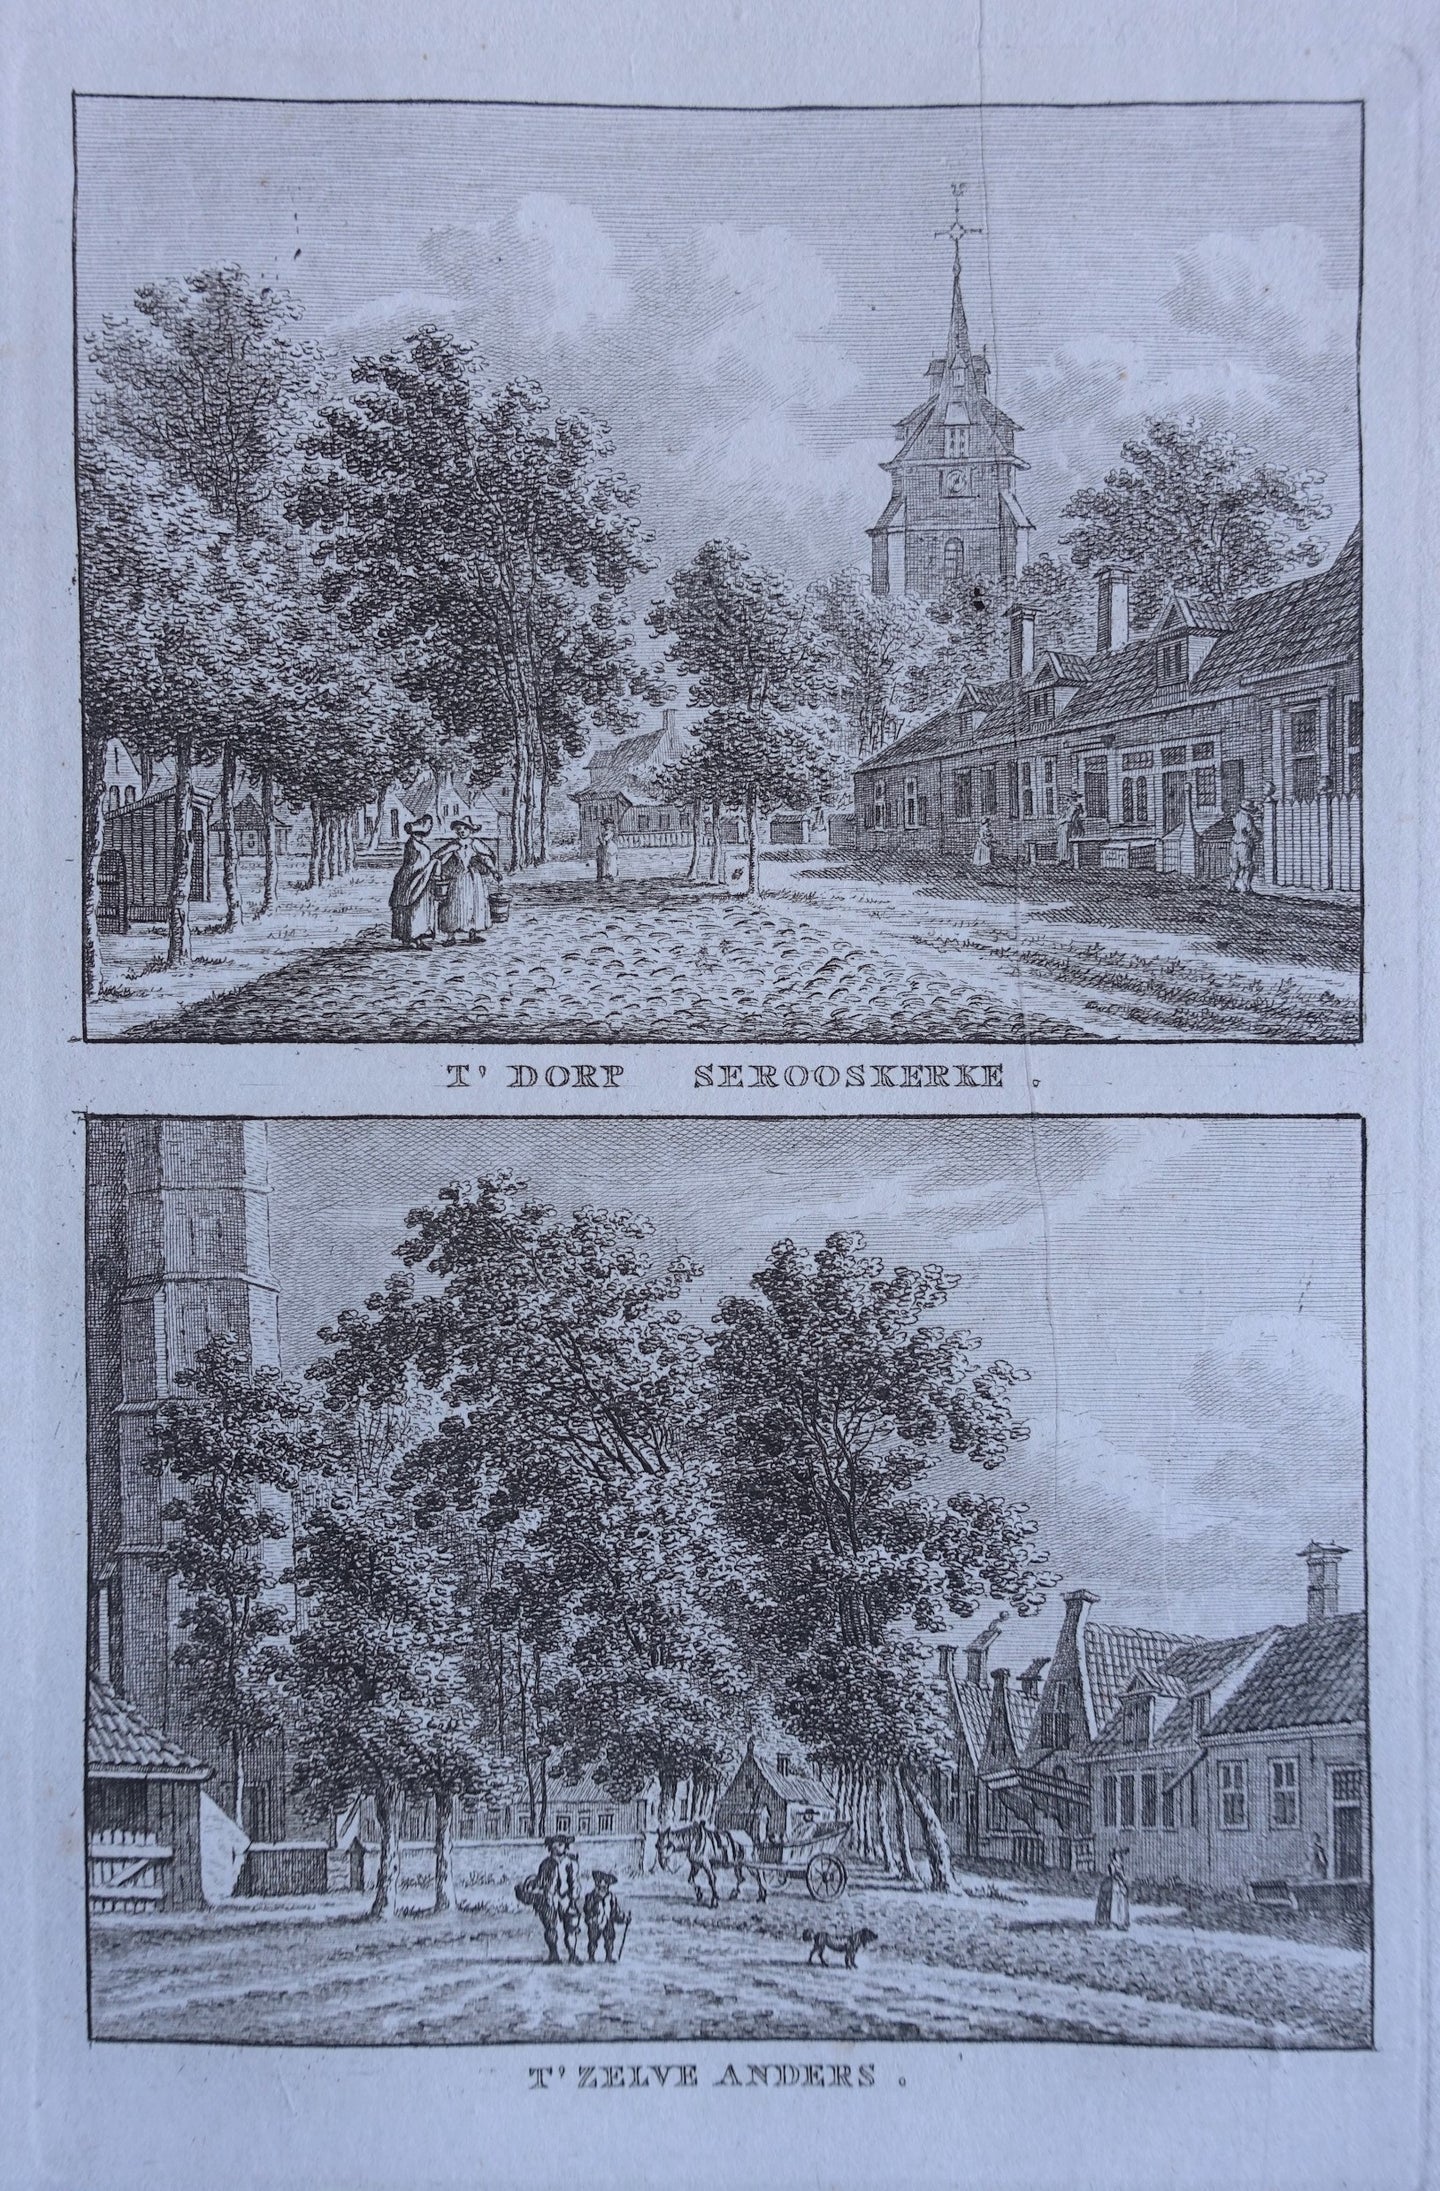 Serooskerke (Walcheren) - KF Bendorp - 1793